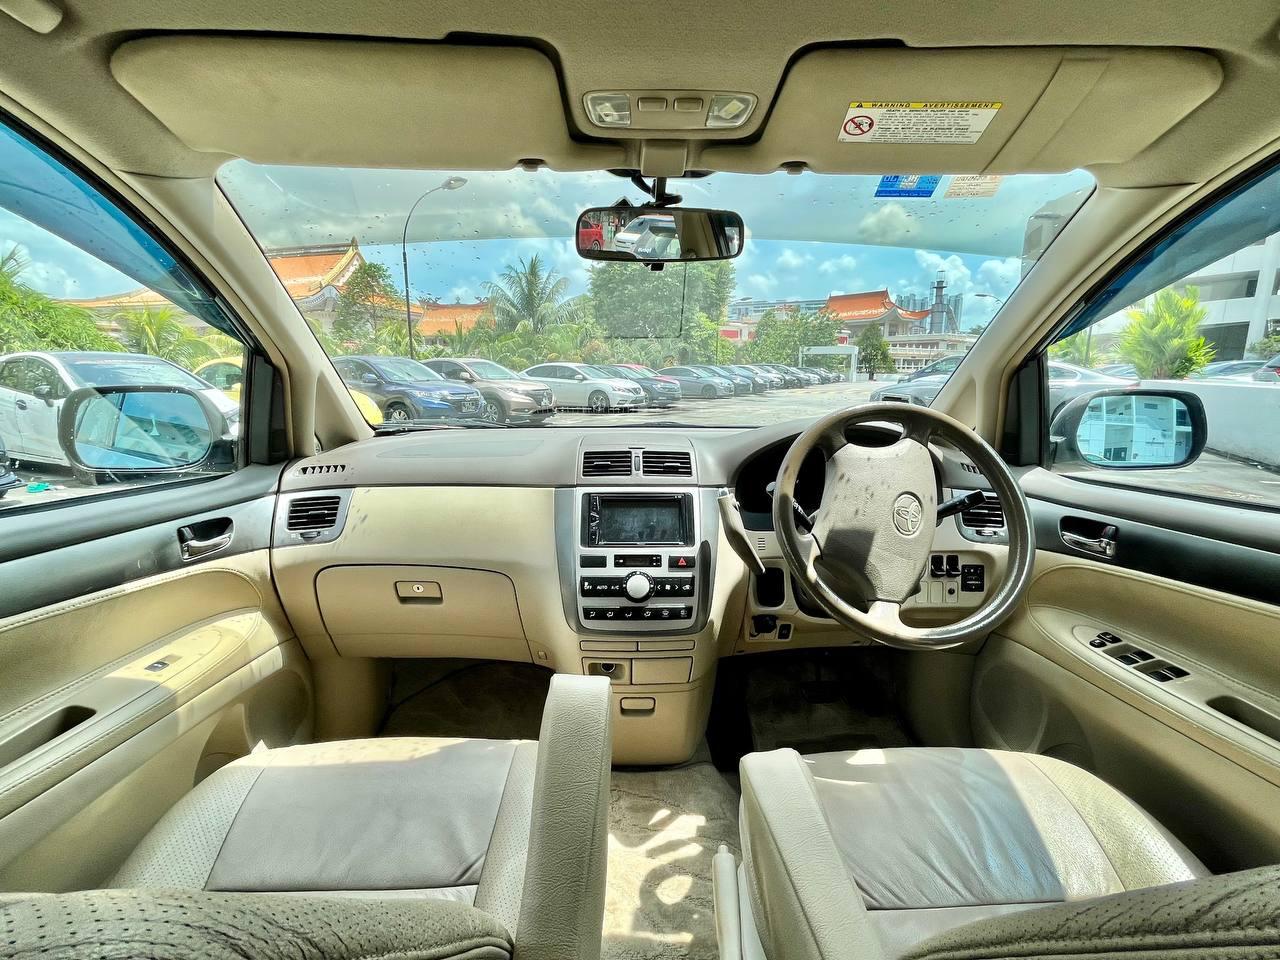 Toyota Picnic interior - Cockpit